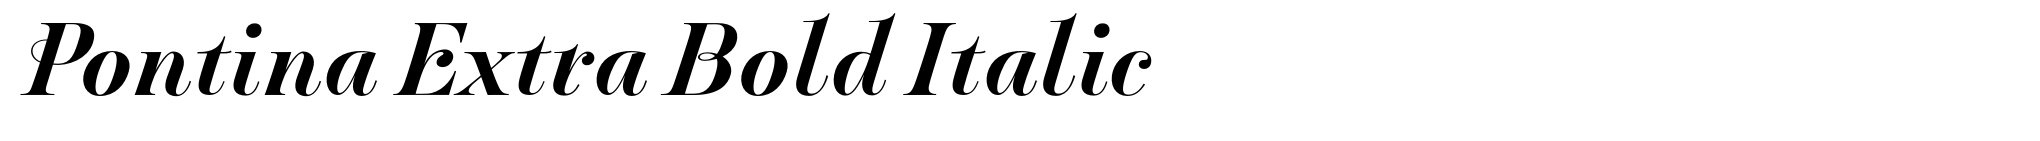 Pontina Extra Bold Italic image